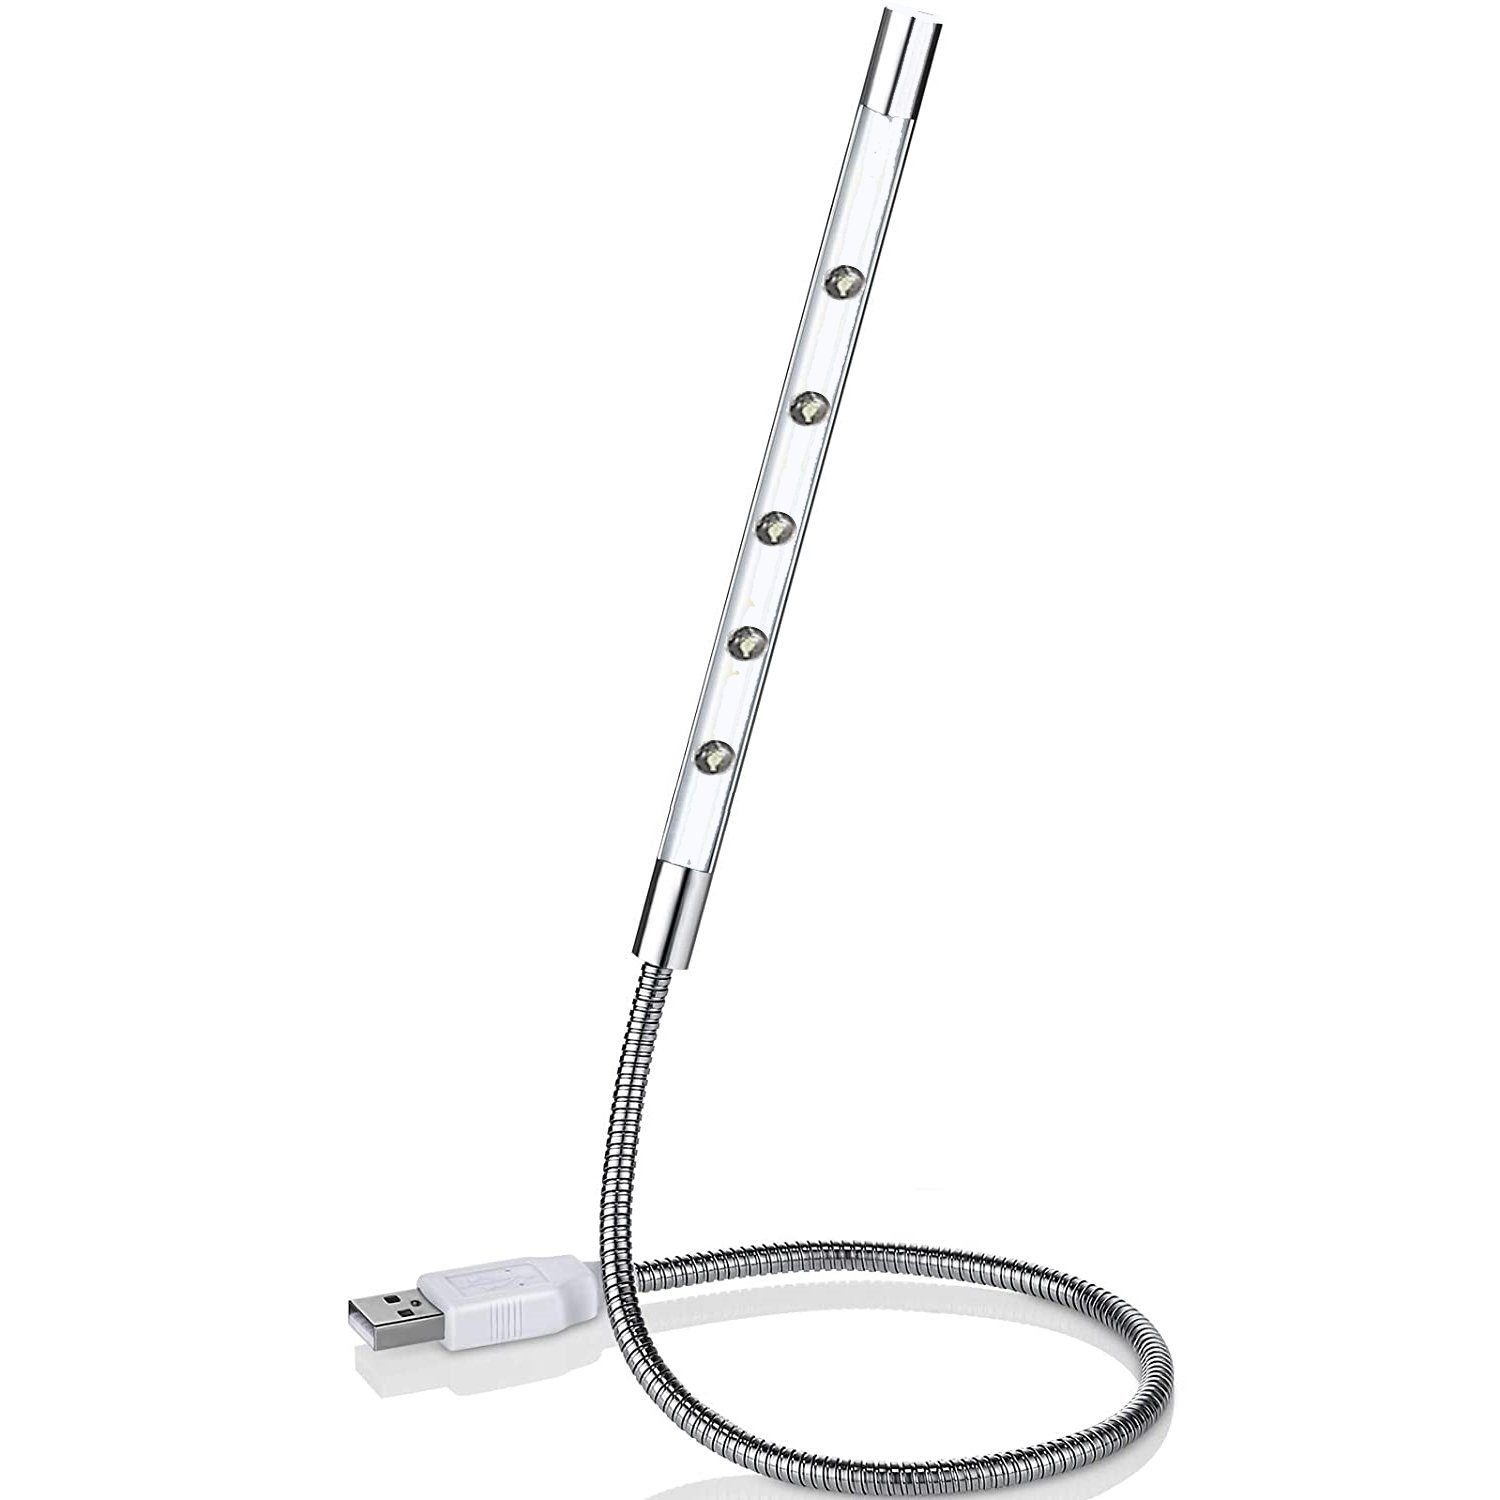 MAVURA LED Leselampe Schwanenhals USB schwenkbar fest LED, Notebook Laptop ultrahellen Lampe Leuchte mit Schwanenhalslampe Tageslichtweiß, integriert, LED Notebooklampe 5 LED